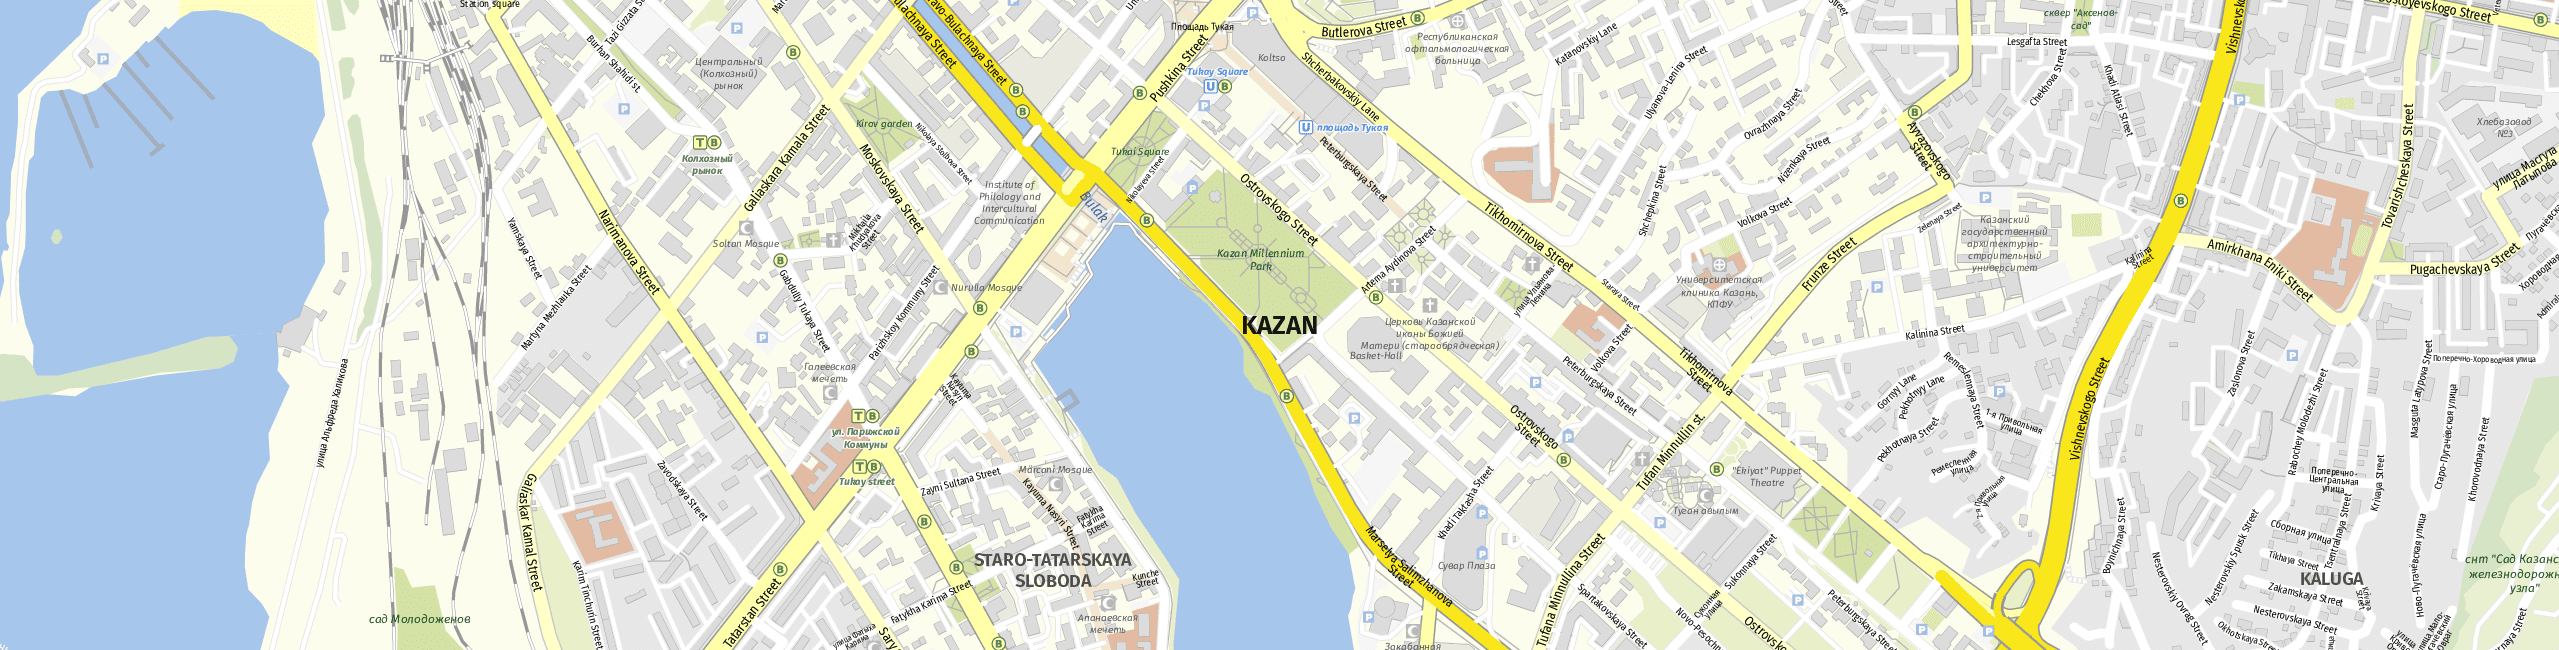 Stadtplan Kazan zum Downloaden.